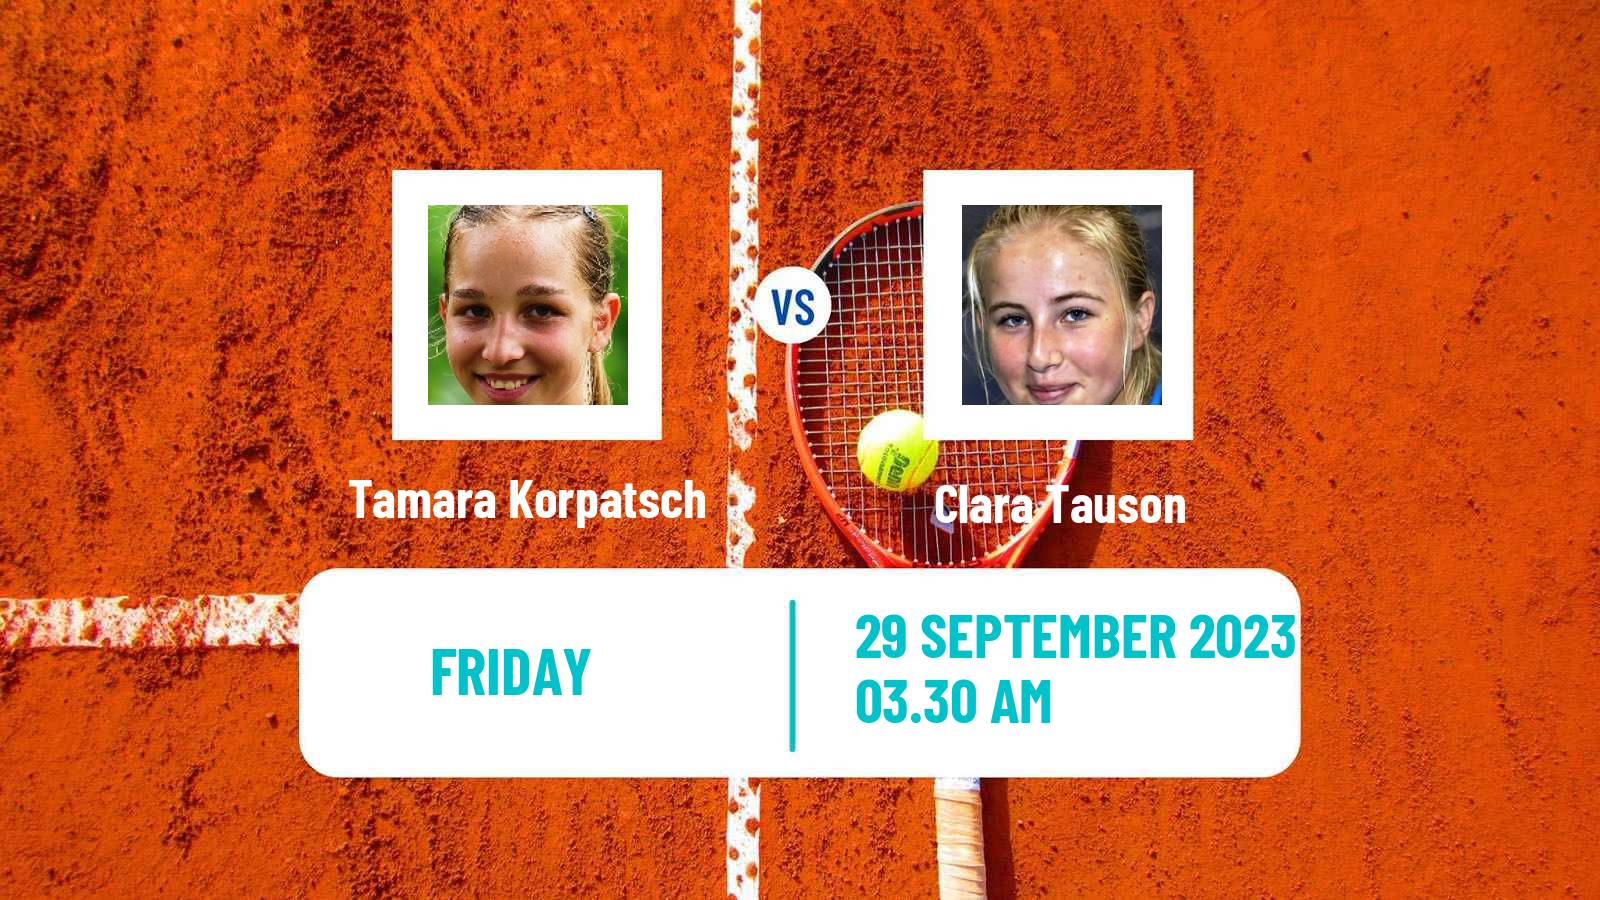 Tennis WTA Beijing Tamara Korpatsch - Clara Tauson